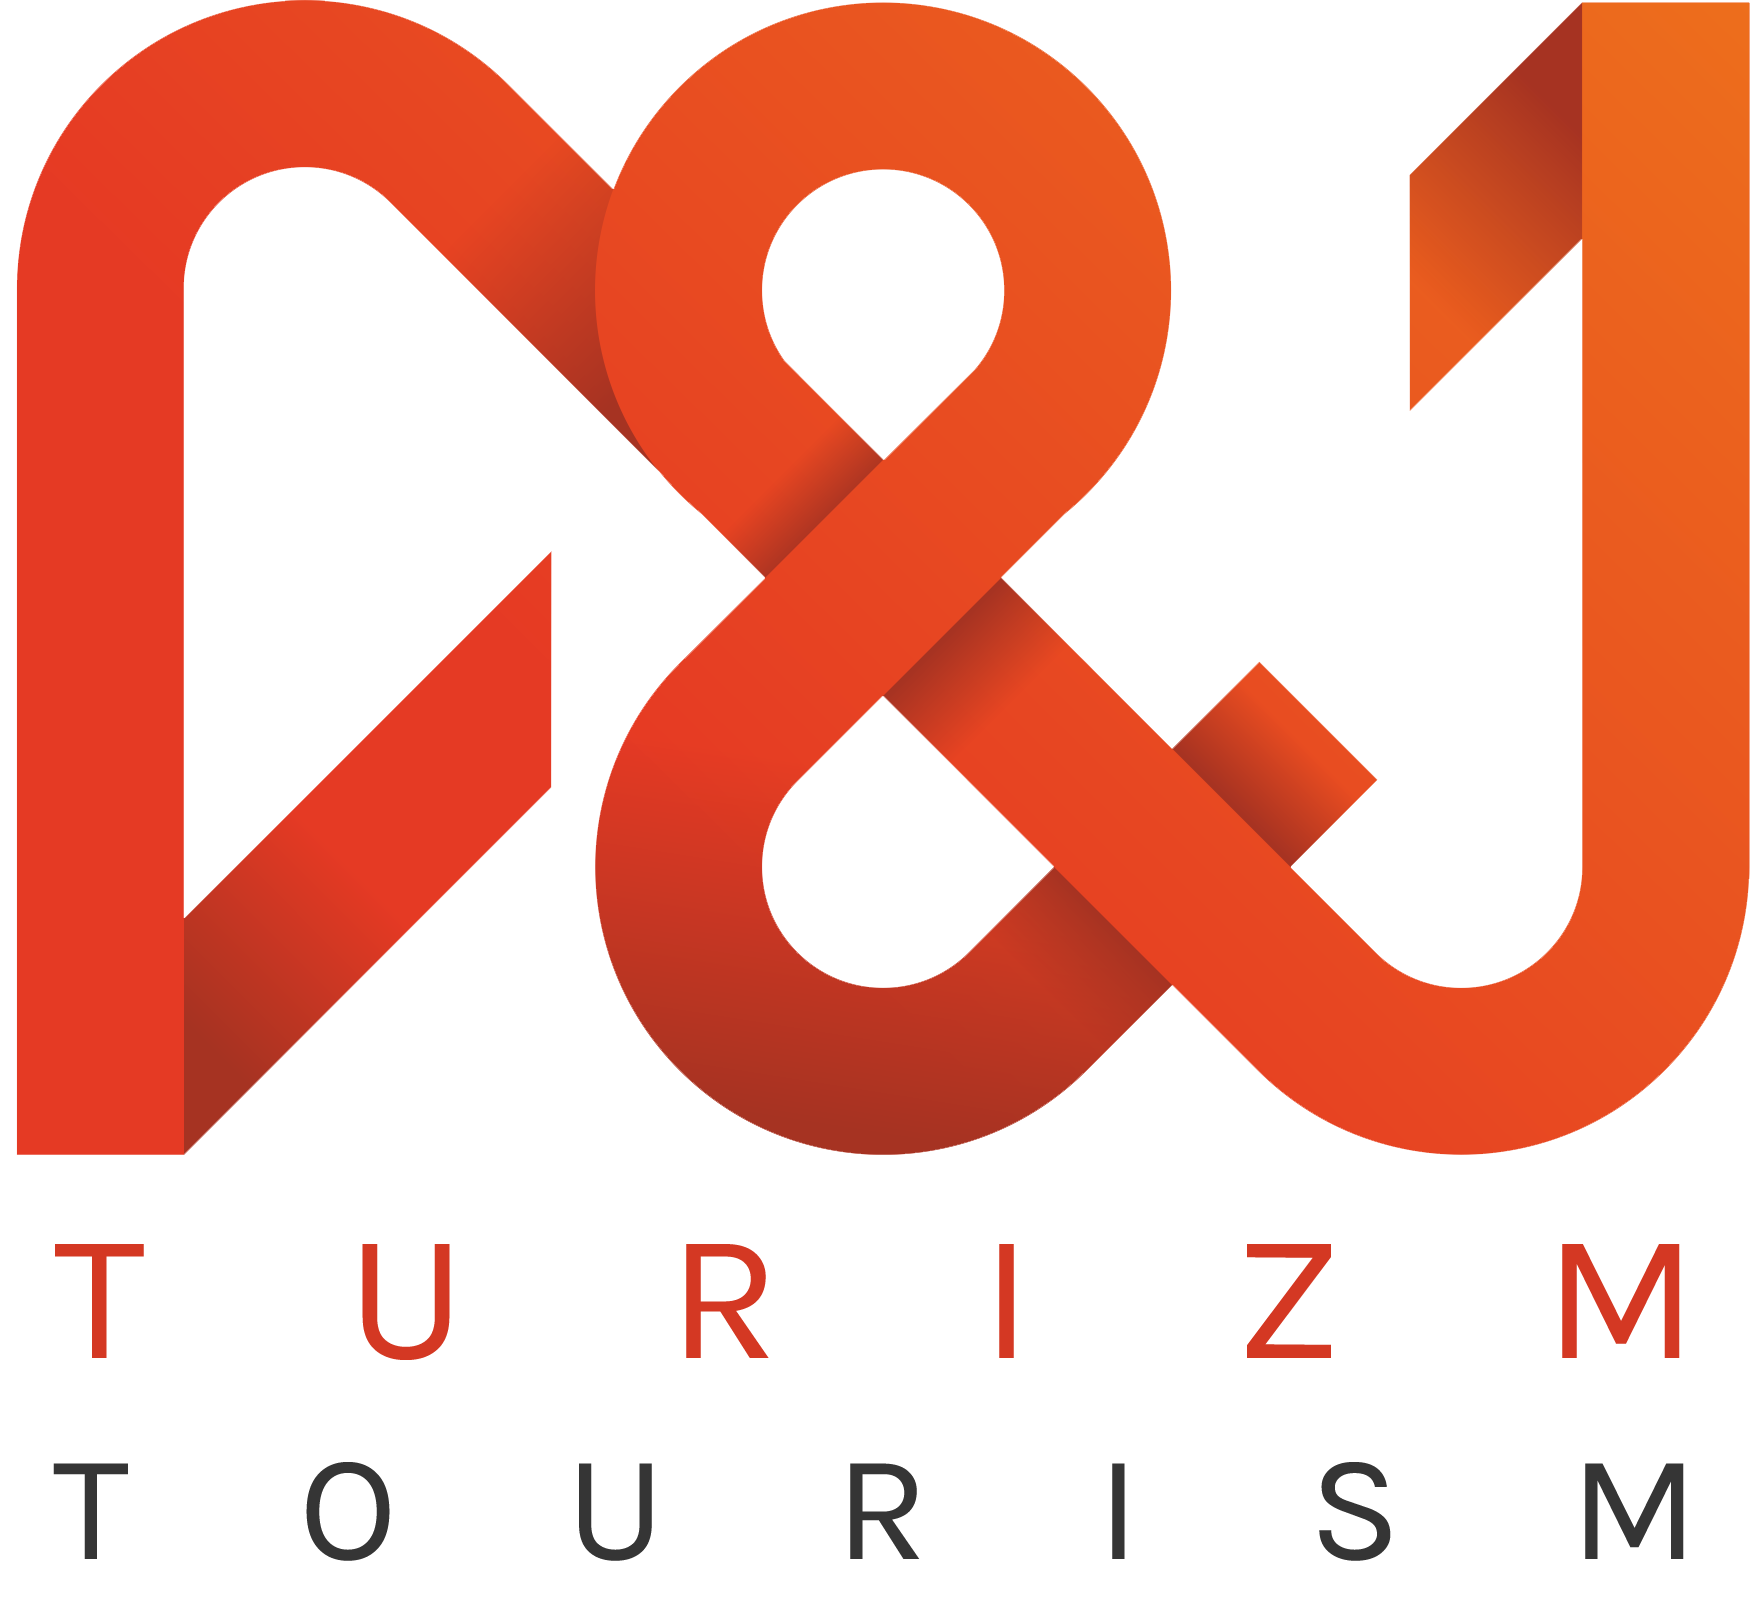 AJ Tourism